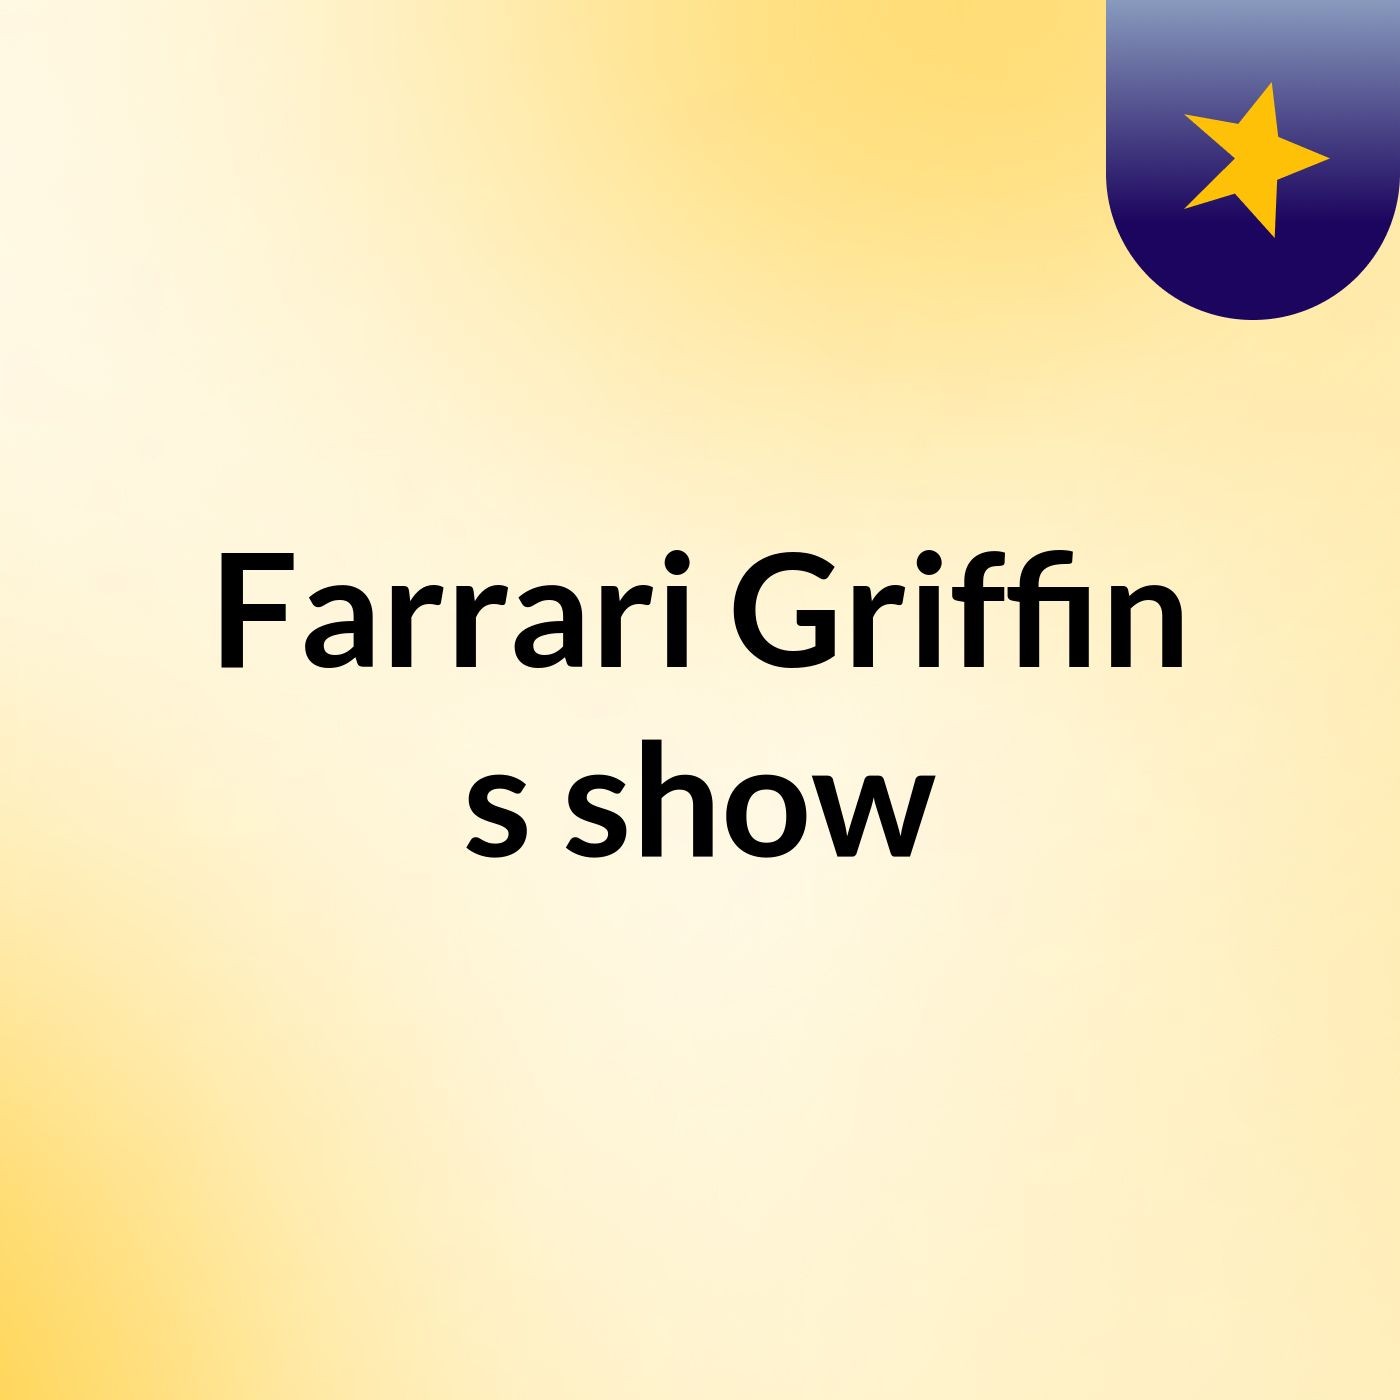 Episode 2 - Farrari Griffin's show